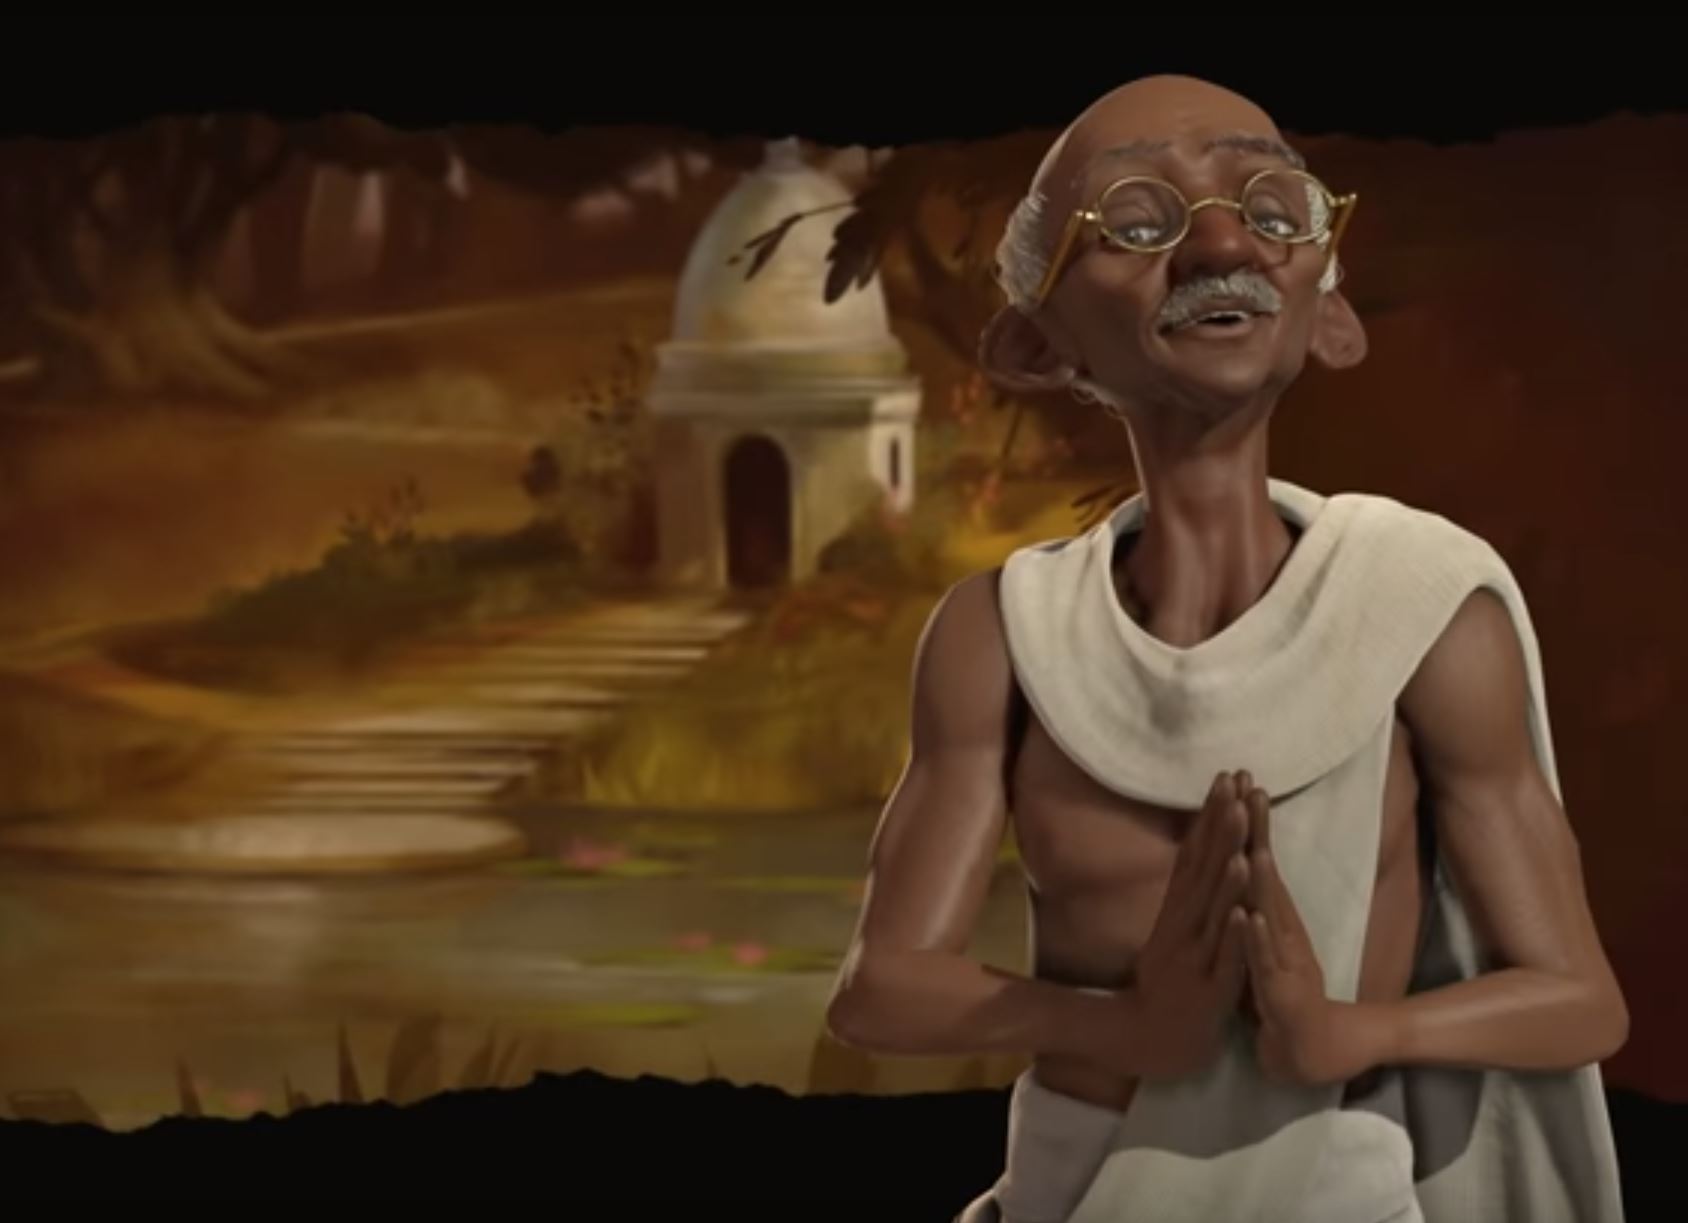 Ghandi from Civilization VI